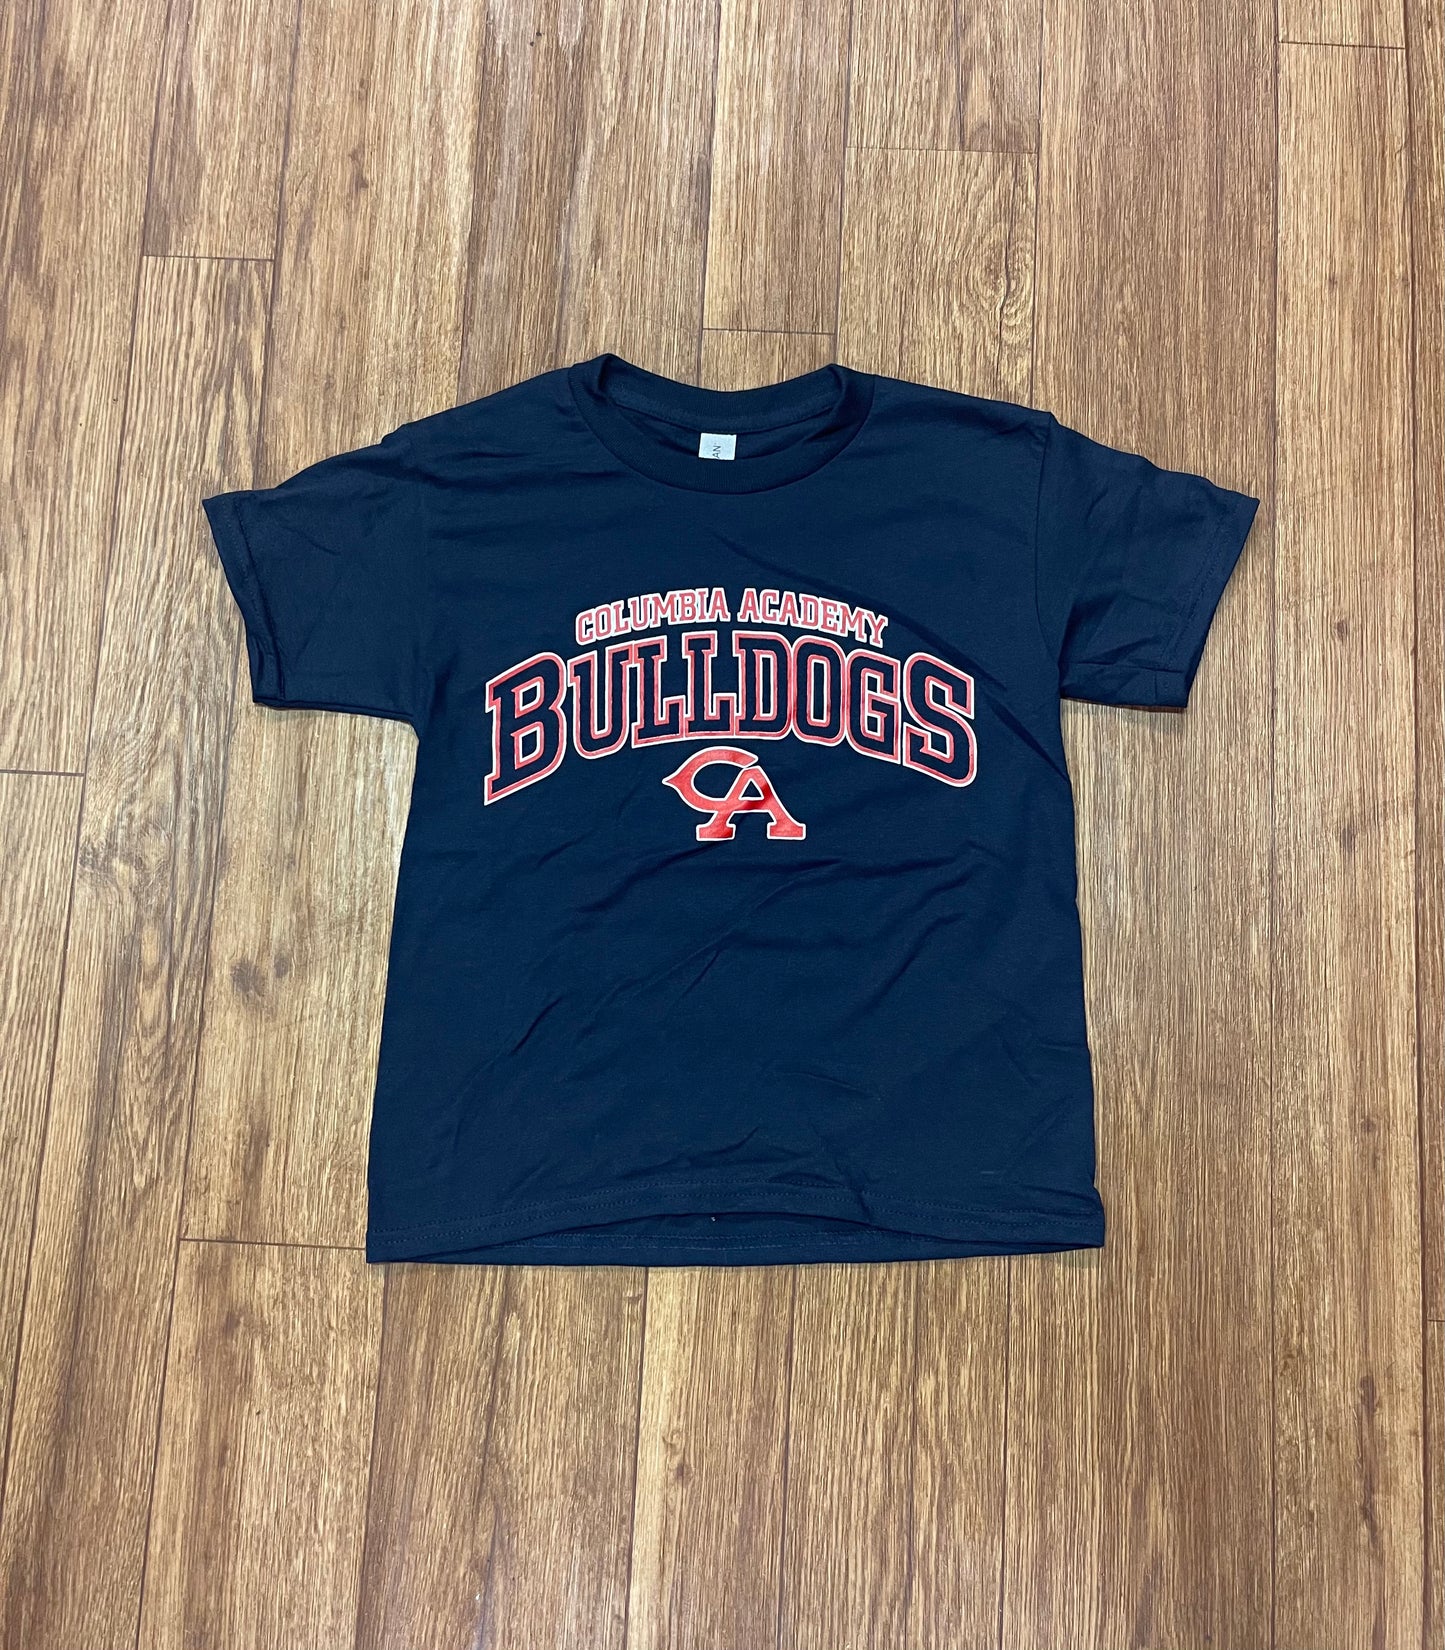 Columbia Academy T-Shirt